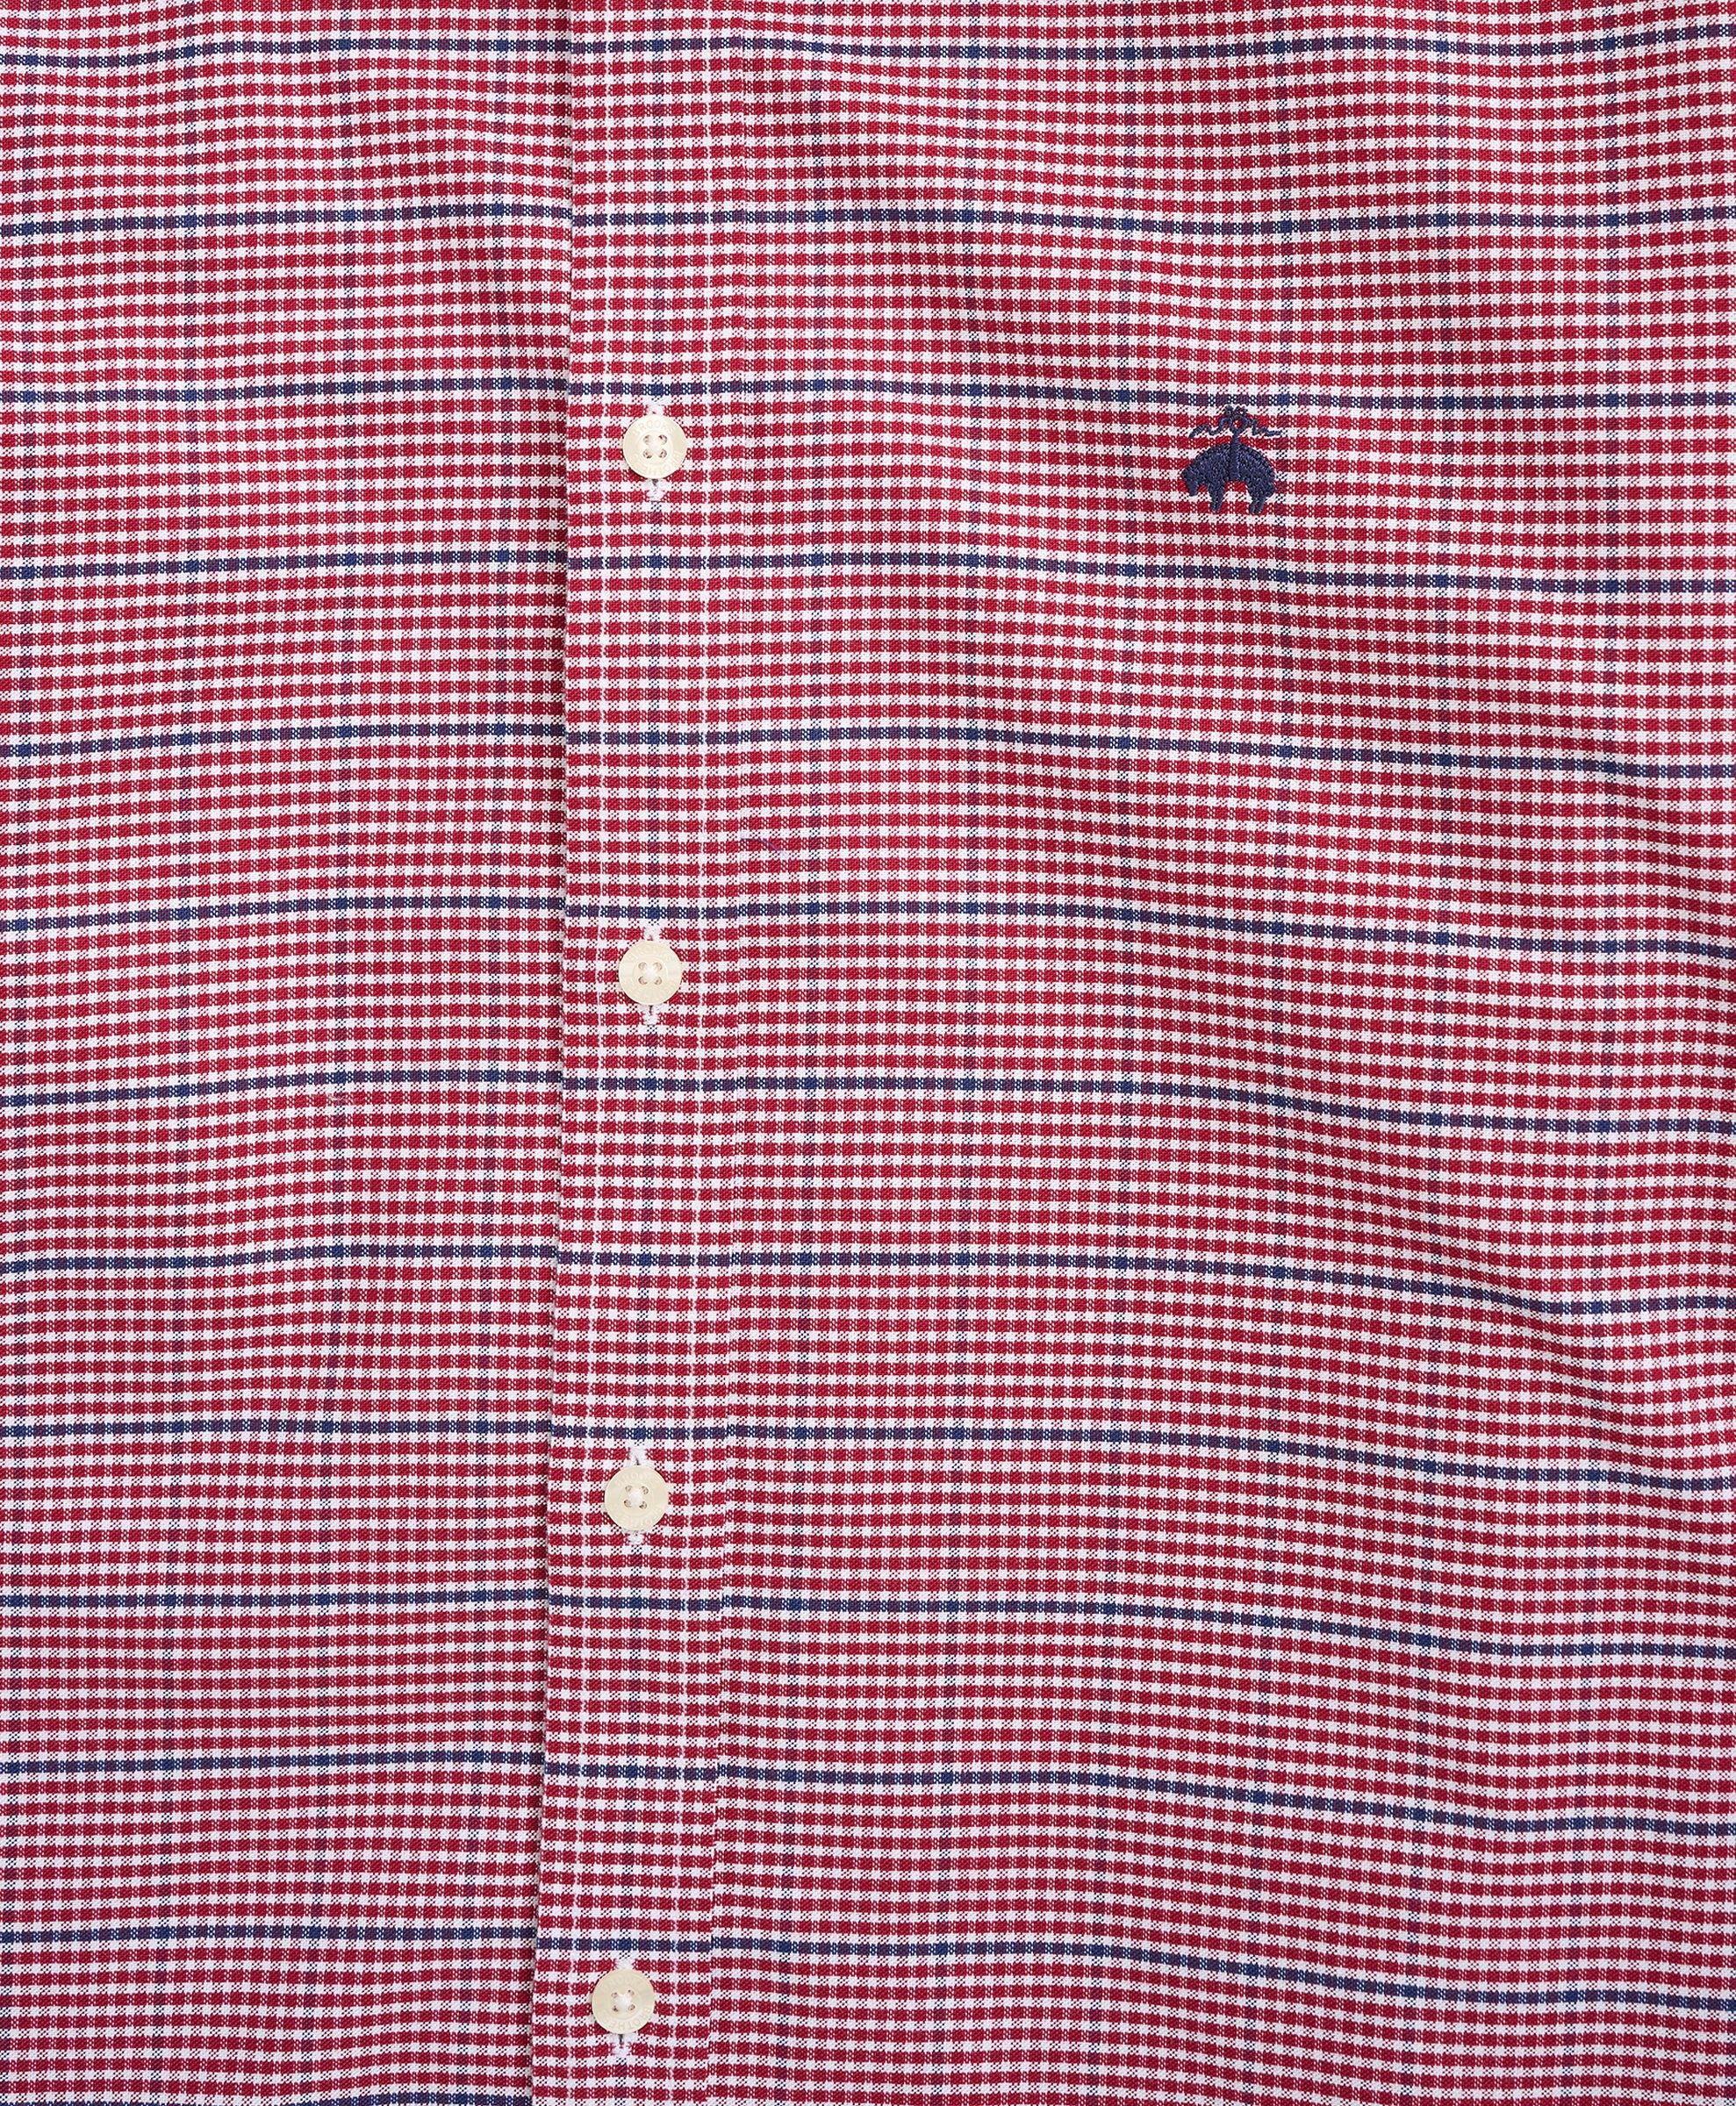 Stretch Regent Regular-Fit Sport Shirt, Non-Iron Oxford Button Down Collar Microcheck, image 2